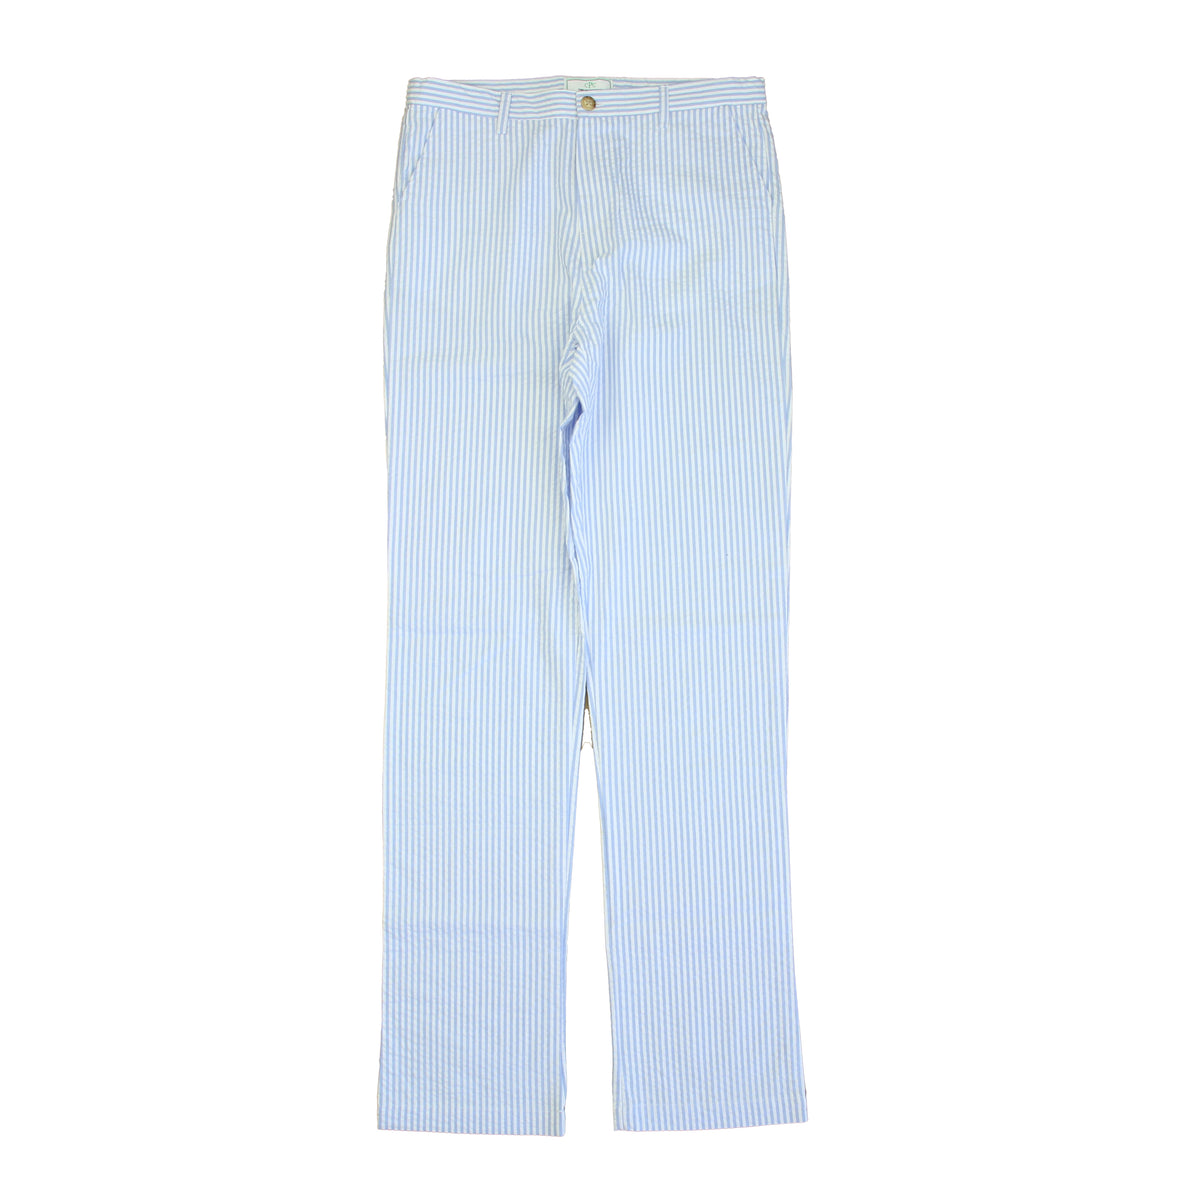 New with Tags: Blue Seersucker Pants size: 2-5T -- FINAL SALE